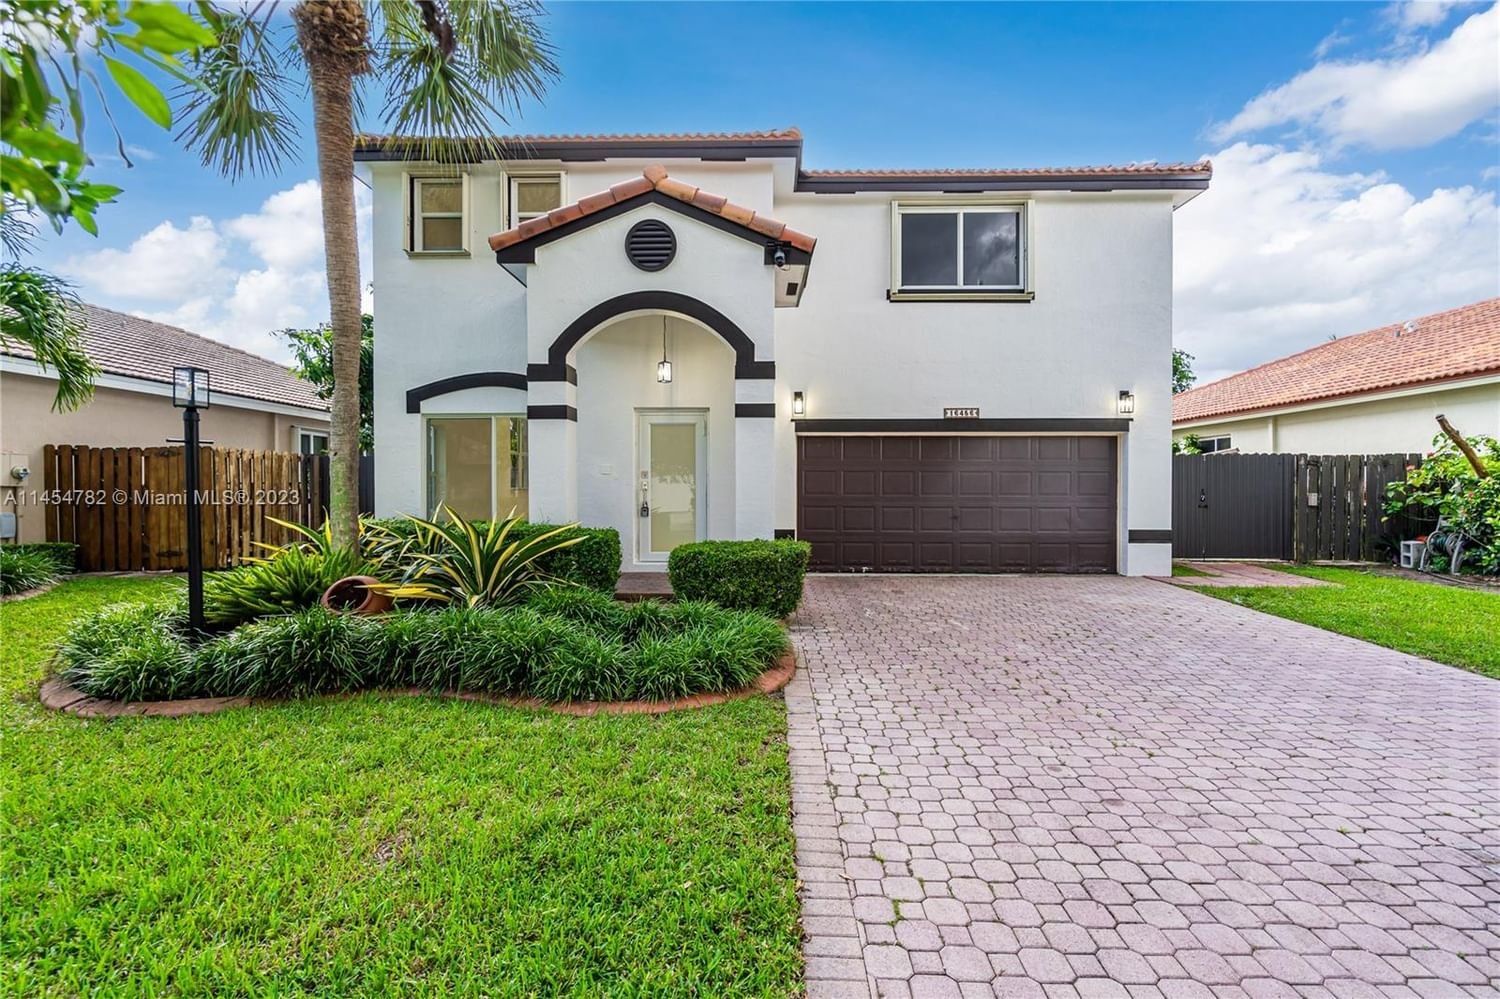 Real estate property located at 16456 76th St, Miami-Dade County, Miami, FL